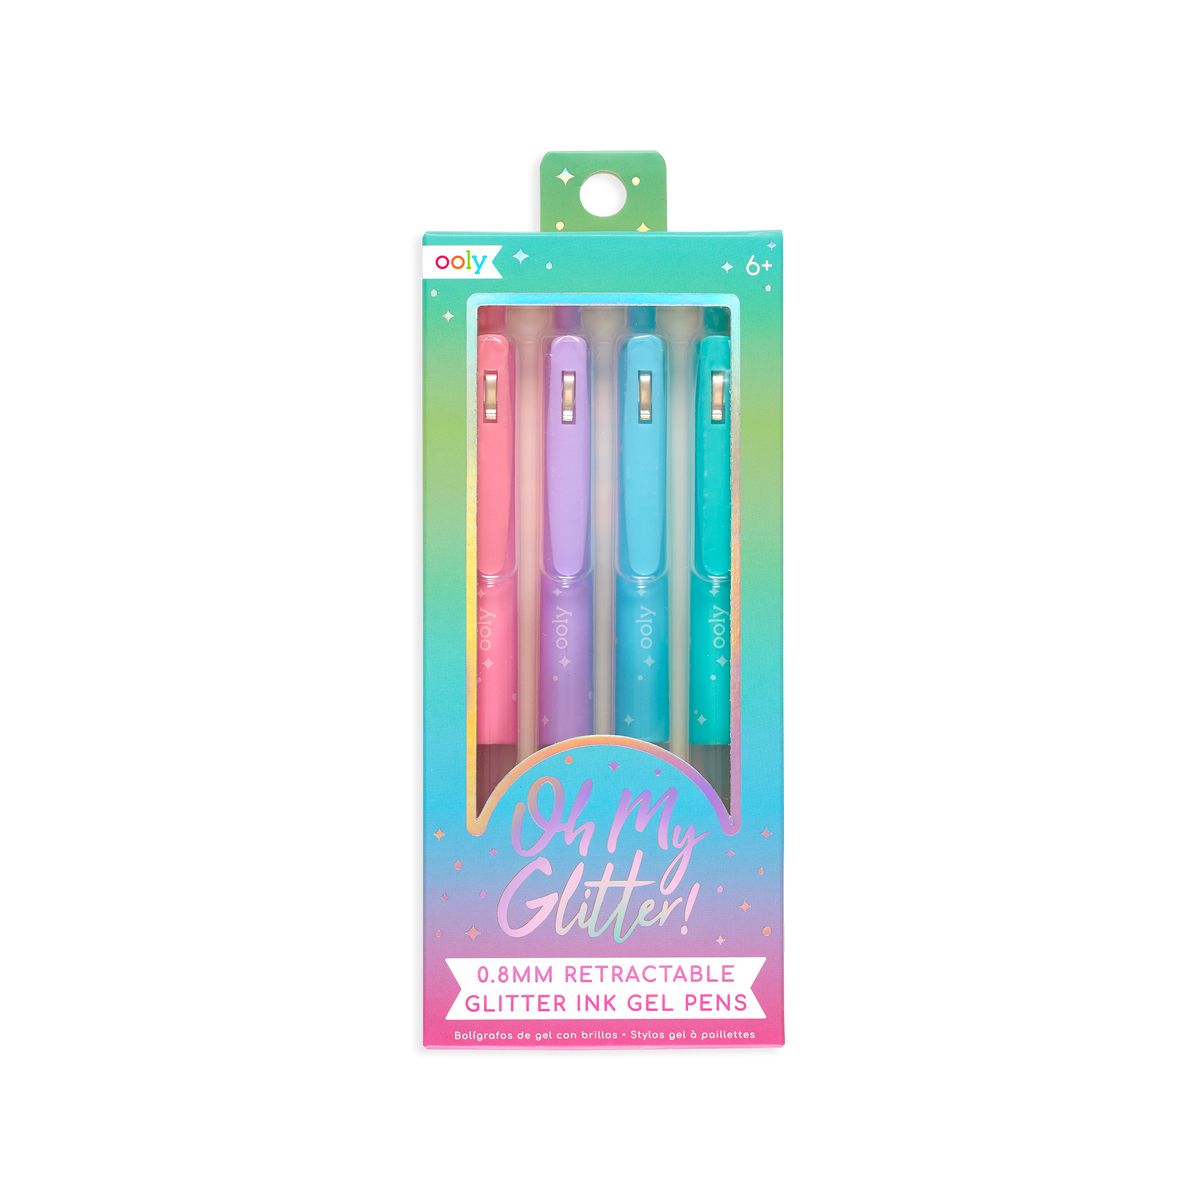 Yummy Yummy Scented Glitter Gel Pens - Set of 12 - Building Blocks